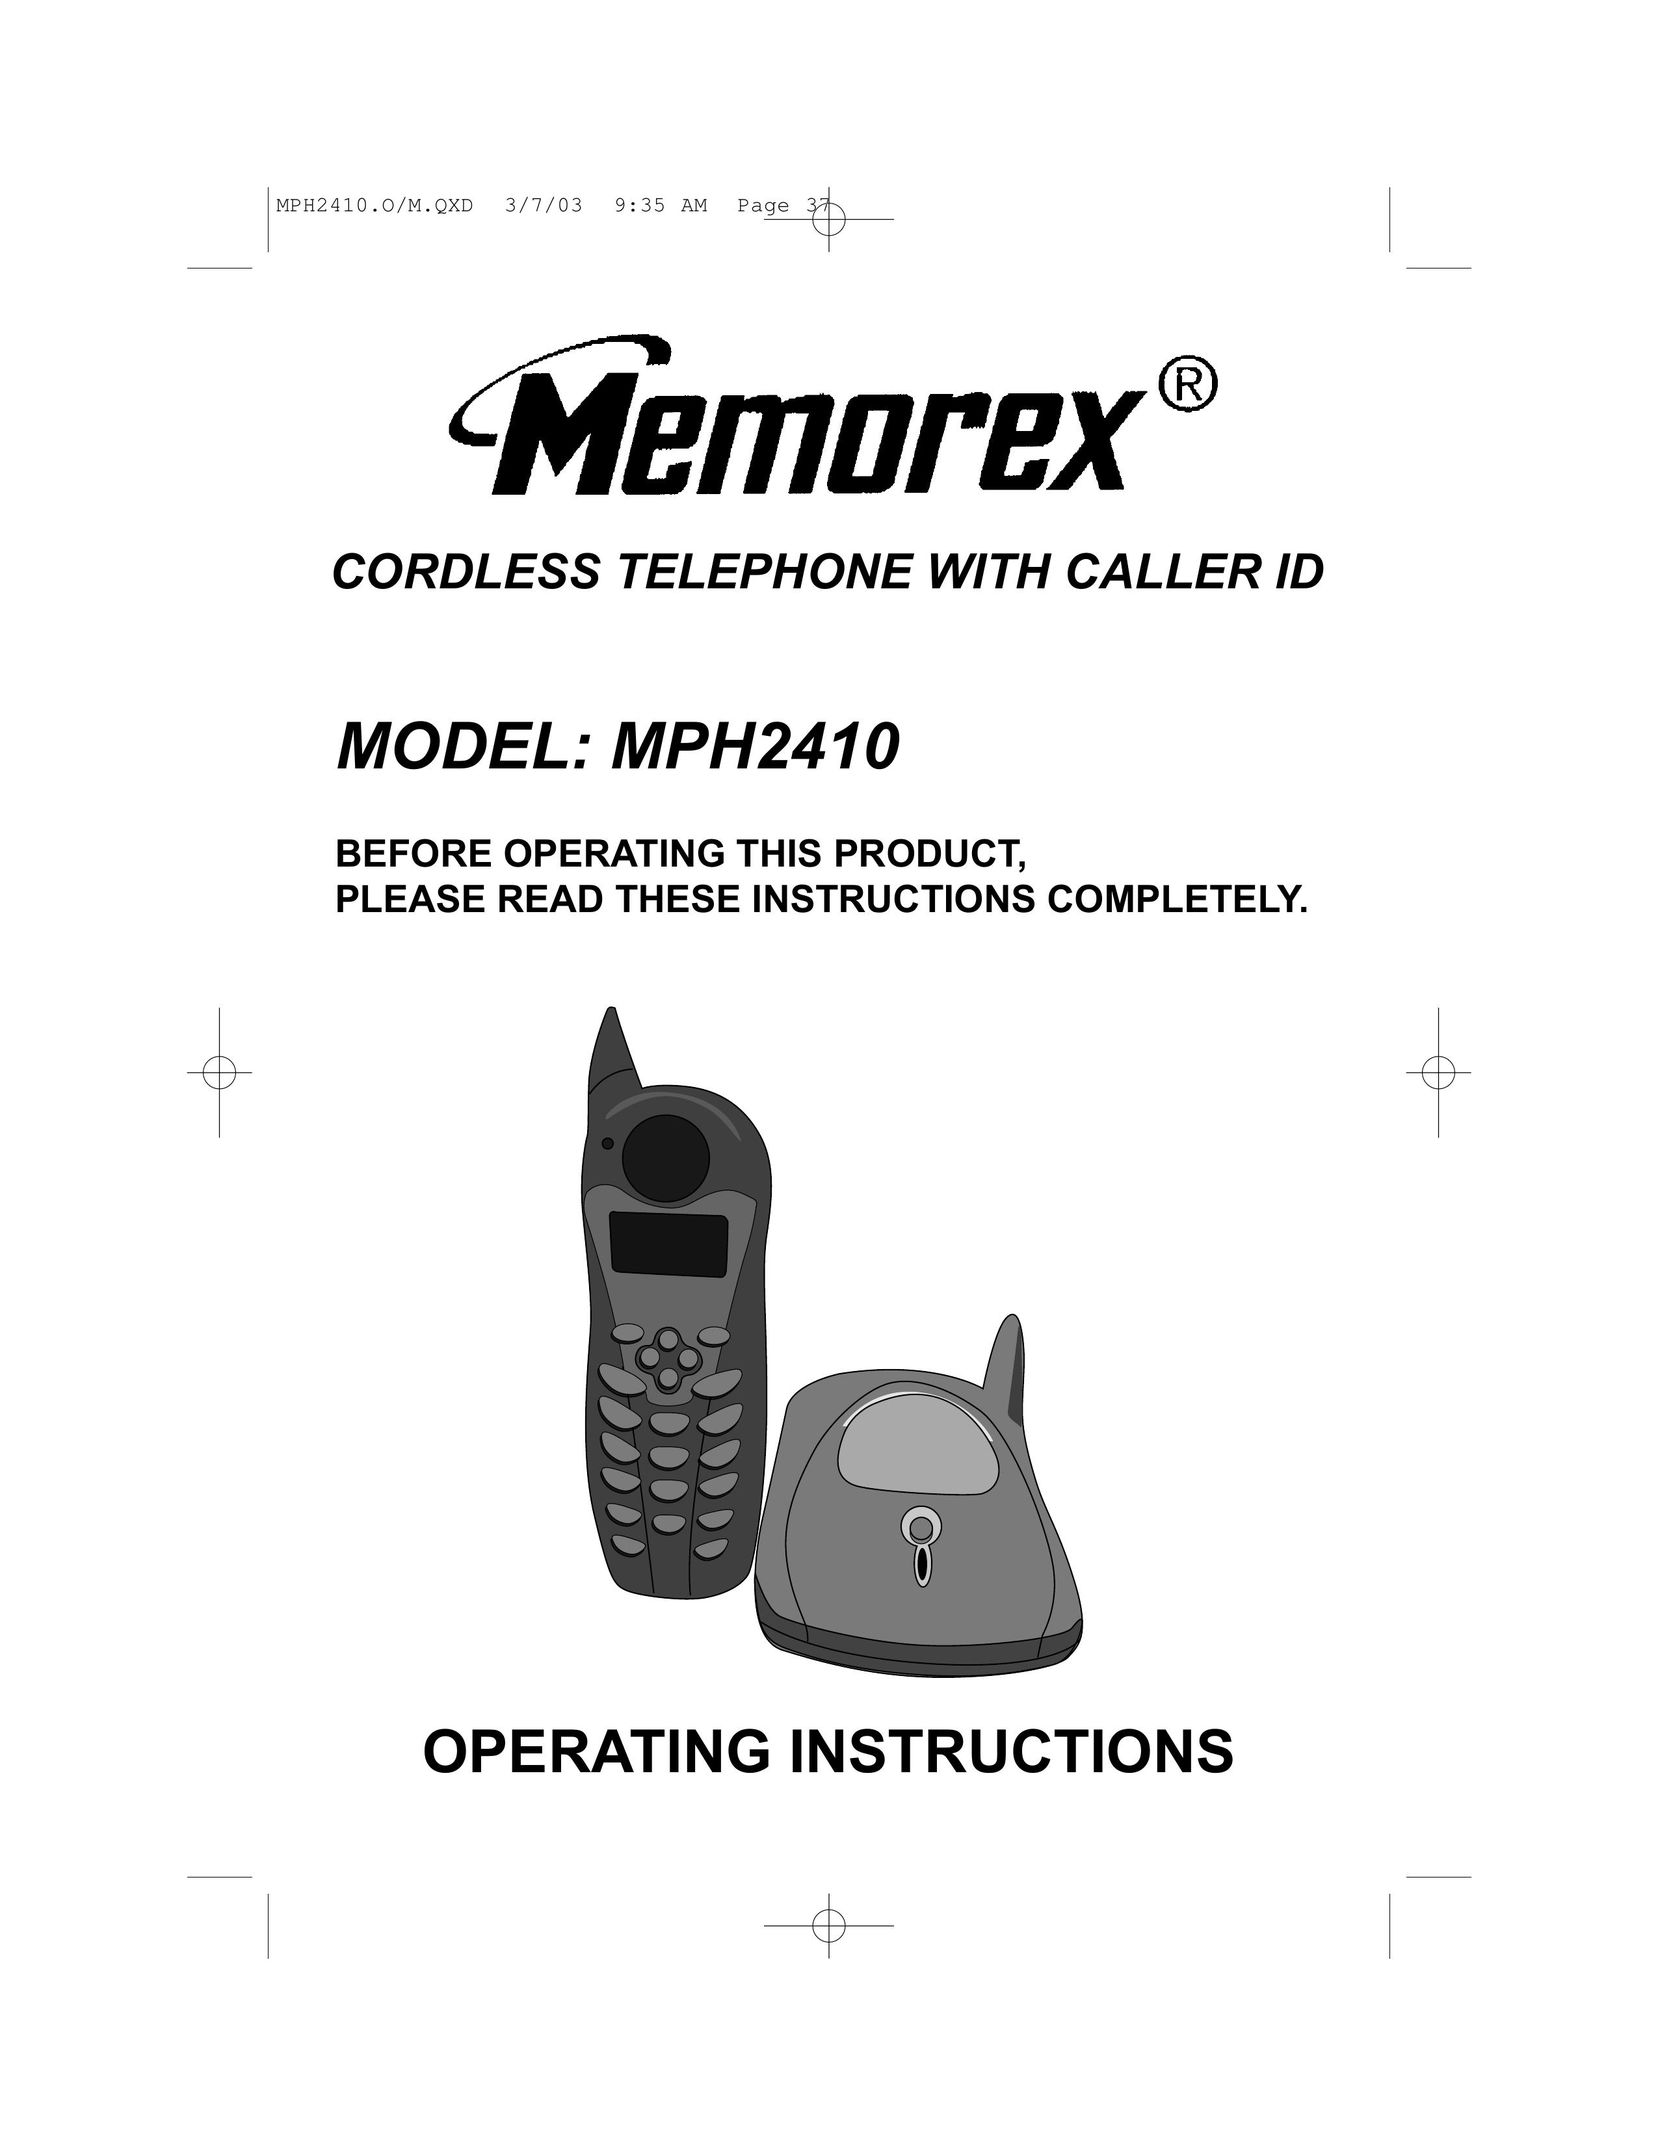 Memorex MPH2410 Cordless Telephone User Manual